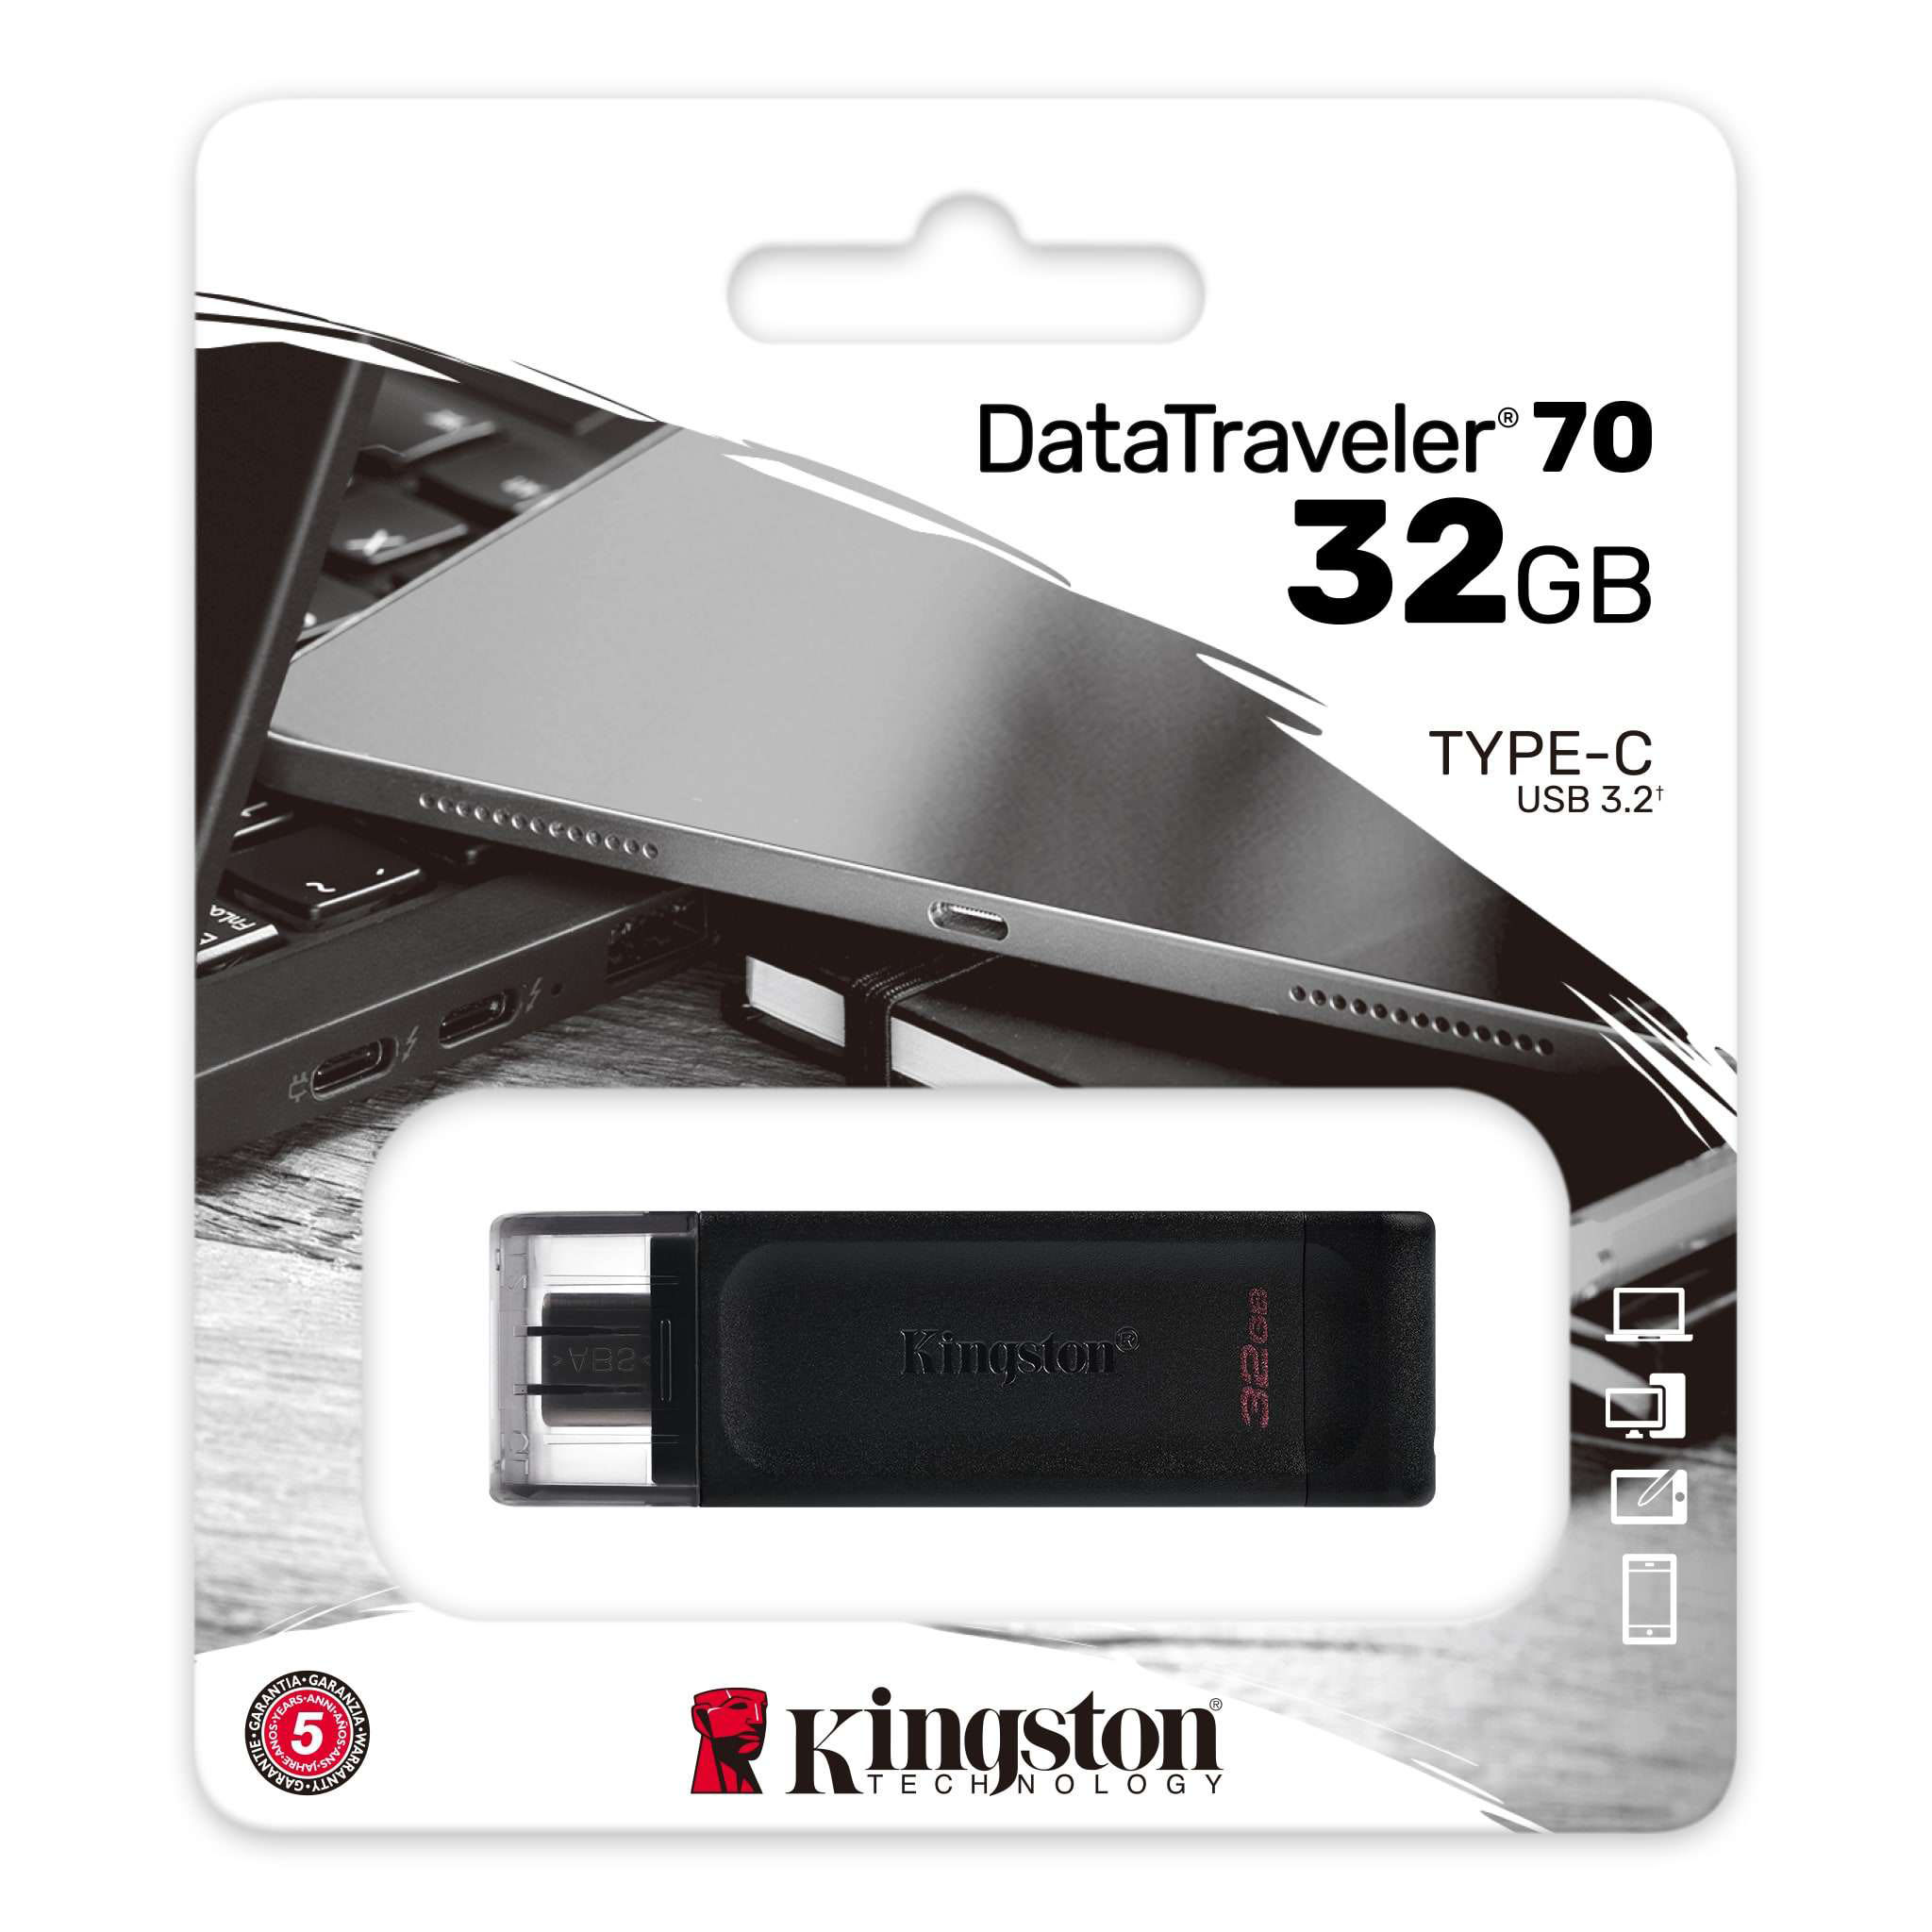 USB Memory Stick Kingston UFD 32GB DT70 Type-C KIN